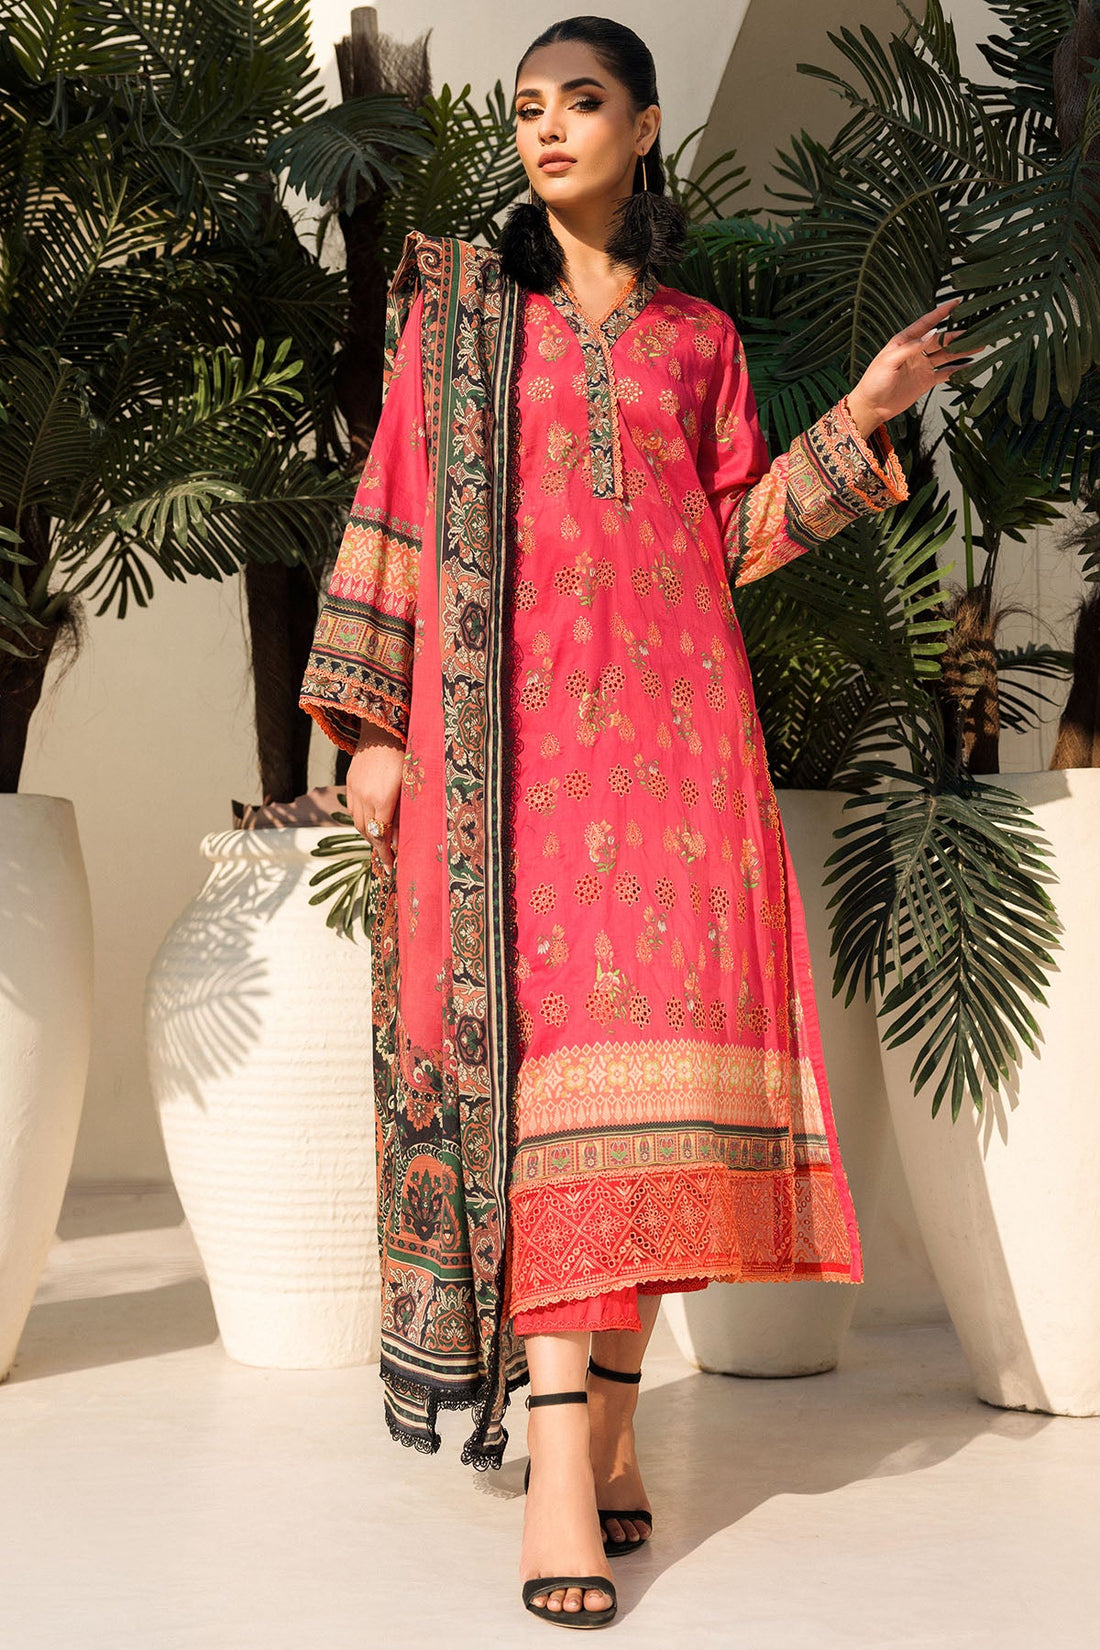 Motifz | Umang Luxury Lawn | A-11 - Khanumjan  Pakistani Clothes and Designer Dresses in UK, USA 